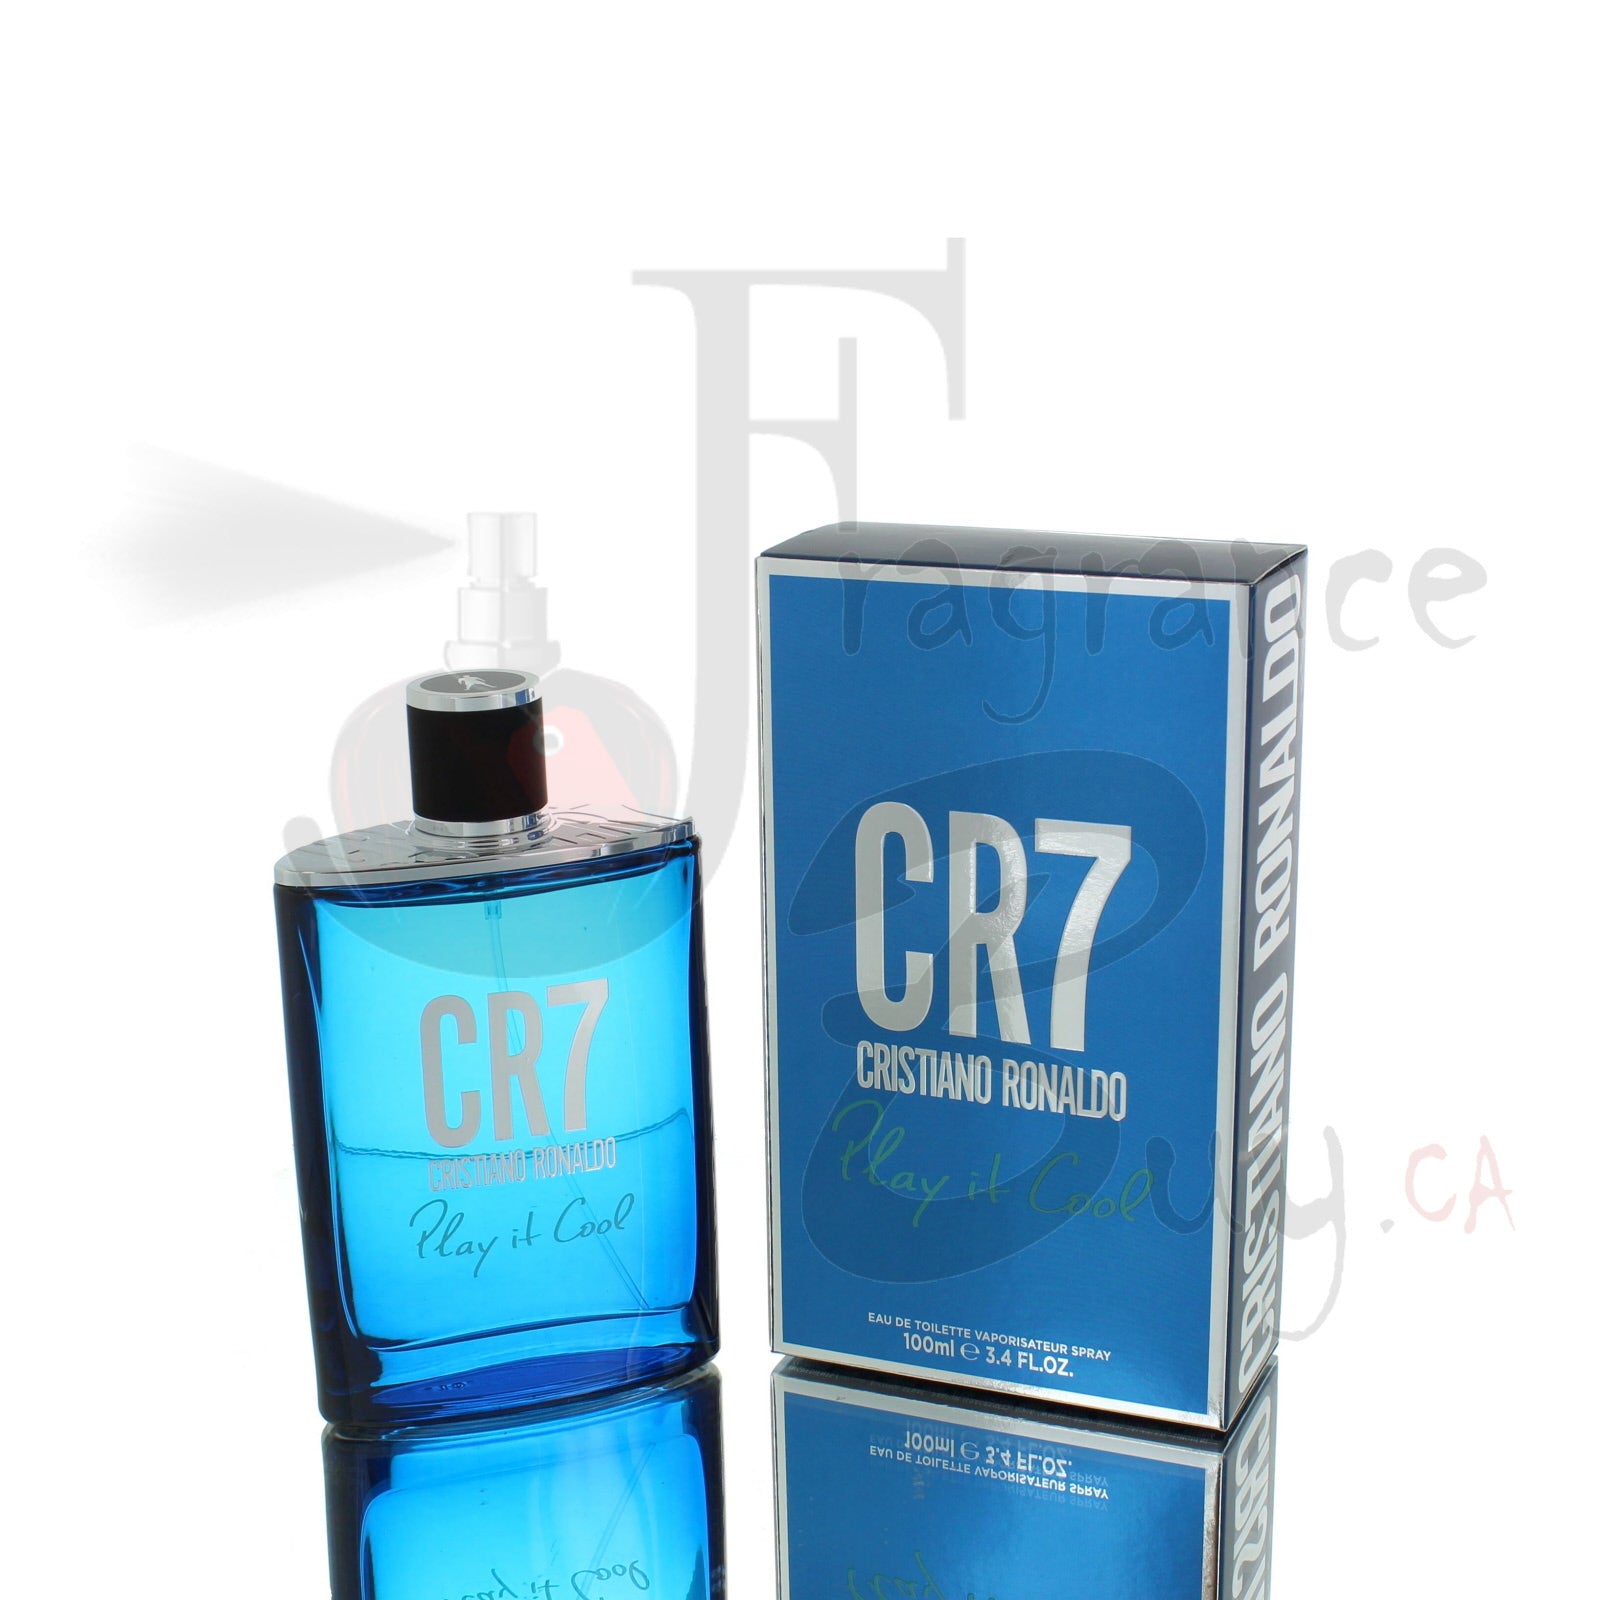 cr7 play it cool perfume price